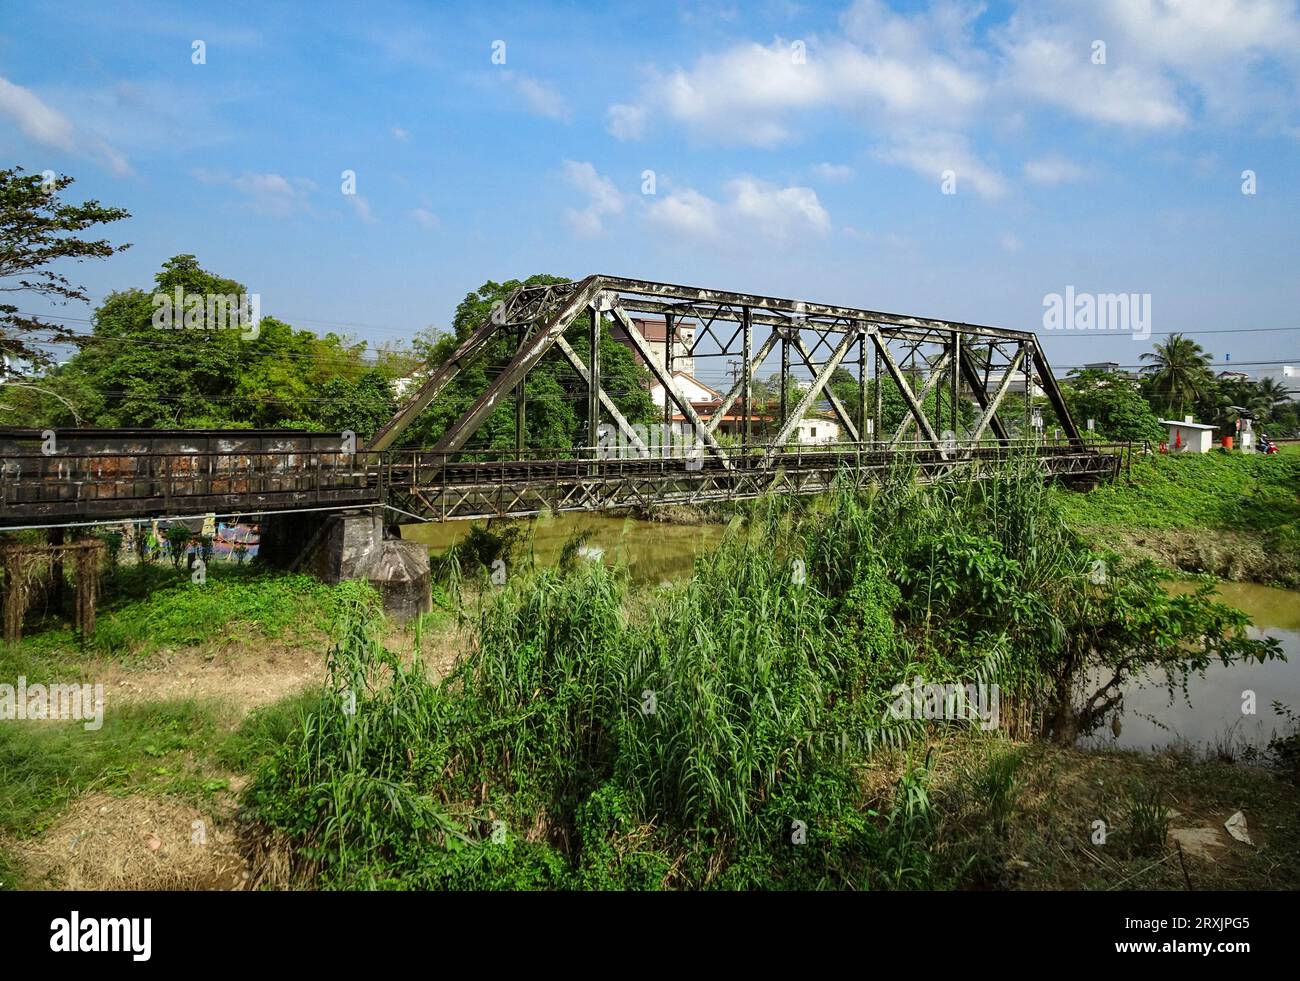 Vintage rusty old railway bridge over the river. Stock Photo